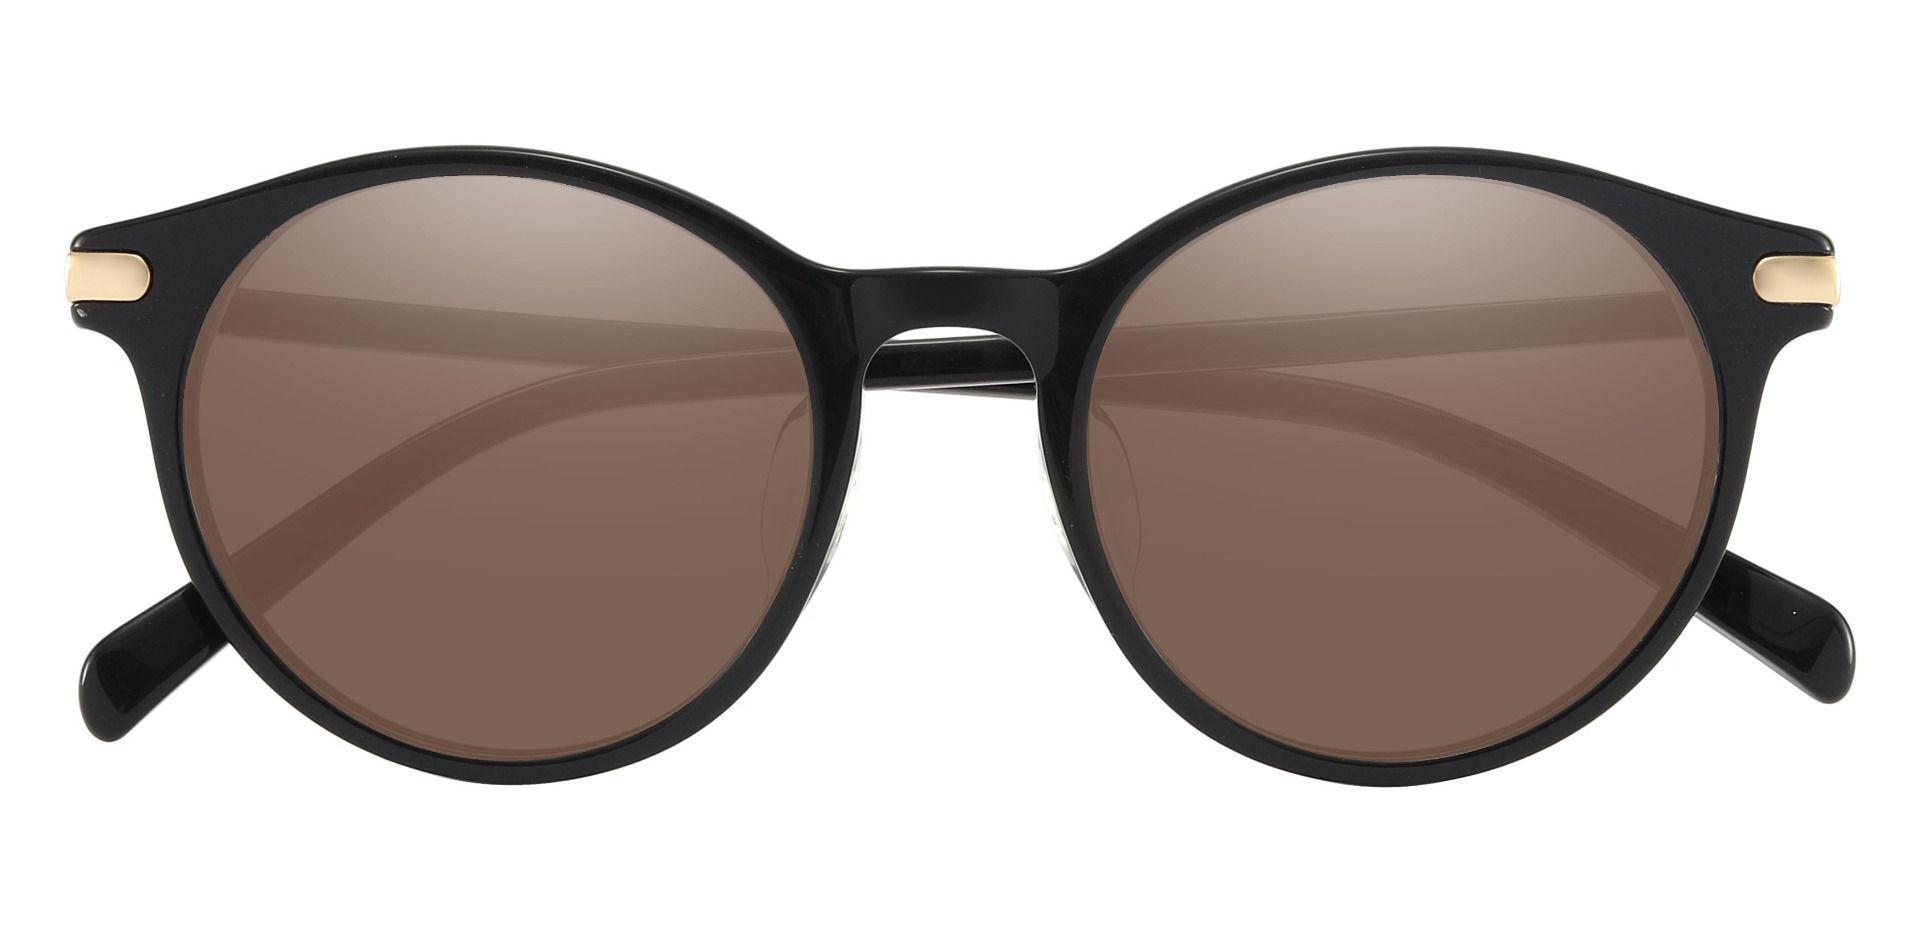 Barker Round Prescription Sunglasses - Black Frame With Brown Lenses